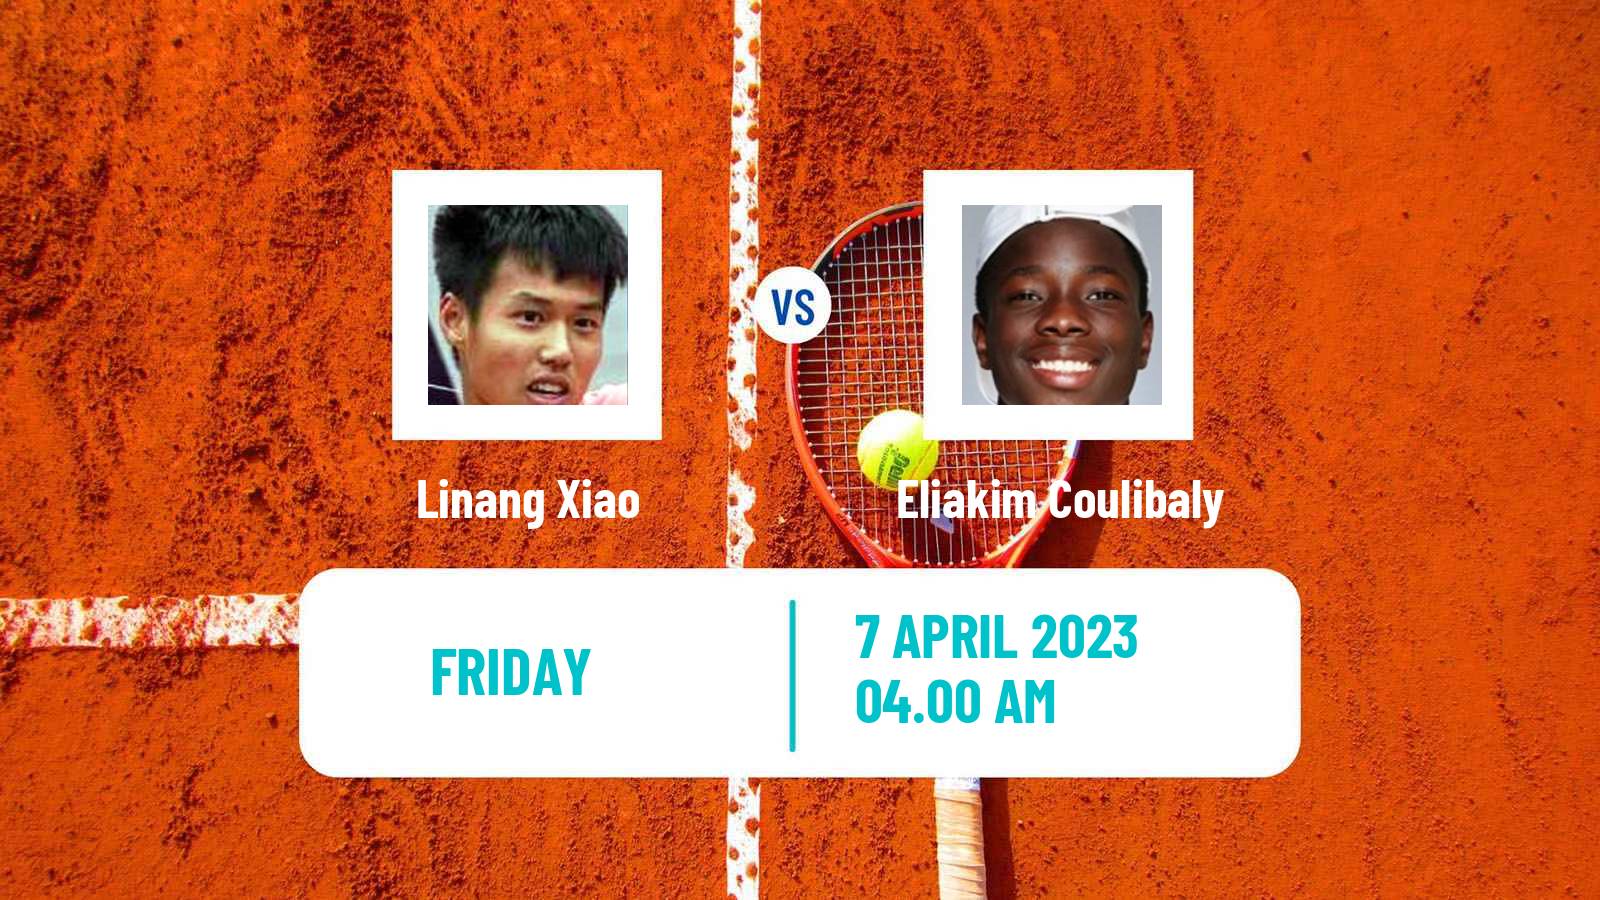 Tennis ITF Tournaments Linang Xiao - Eliakim Coulibaly